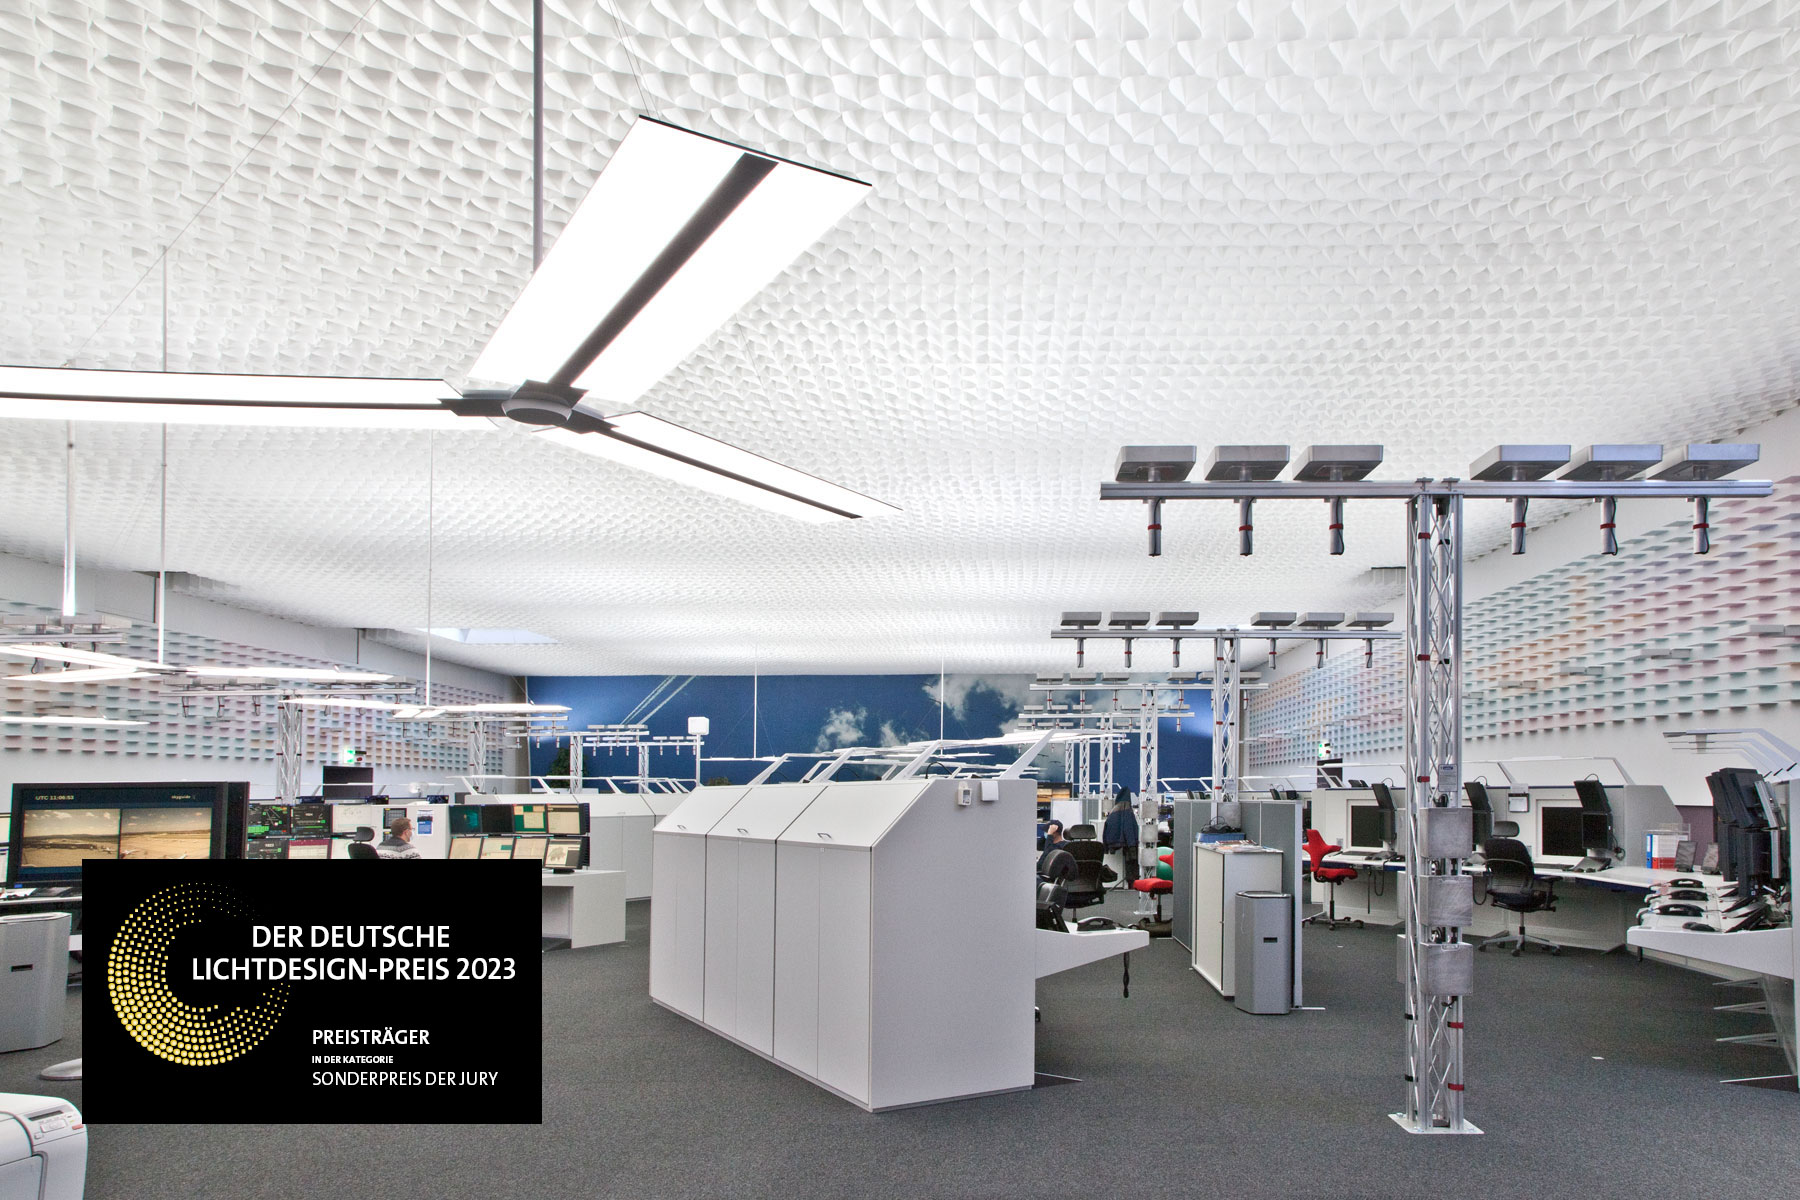 Lichtplanung, Skyguide, Kontrollzentrum, Lichtdesign-Preis 2023
